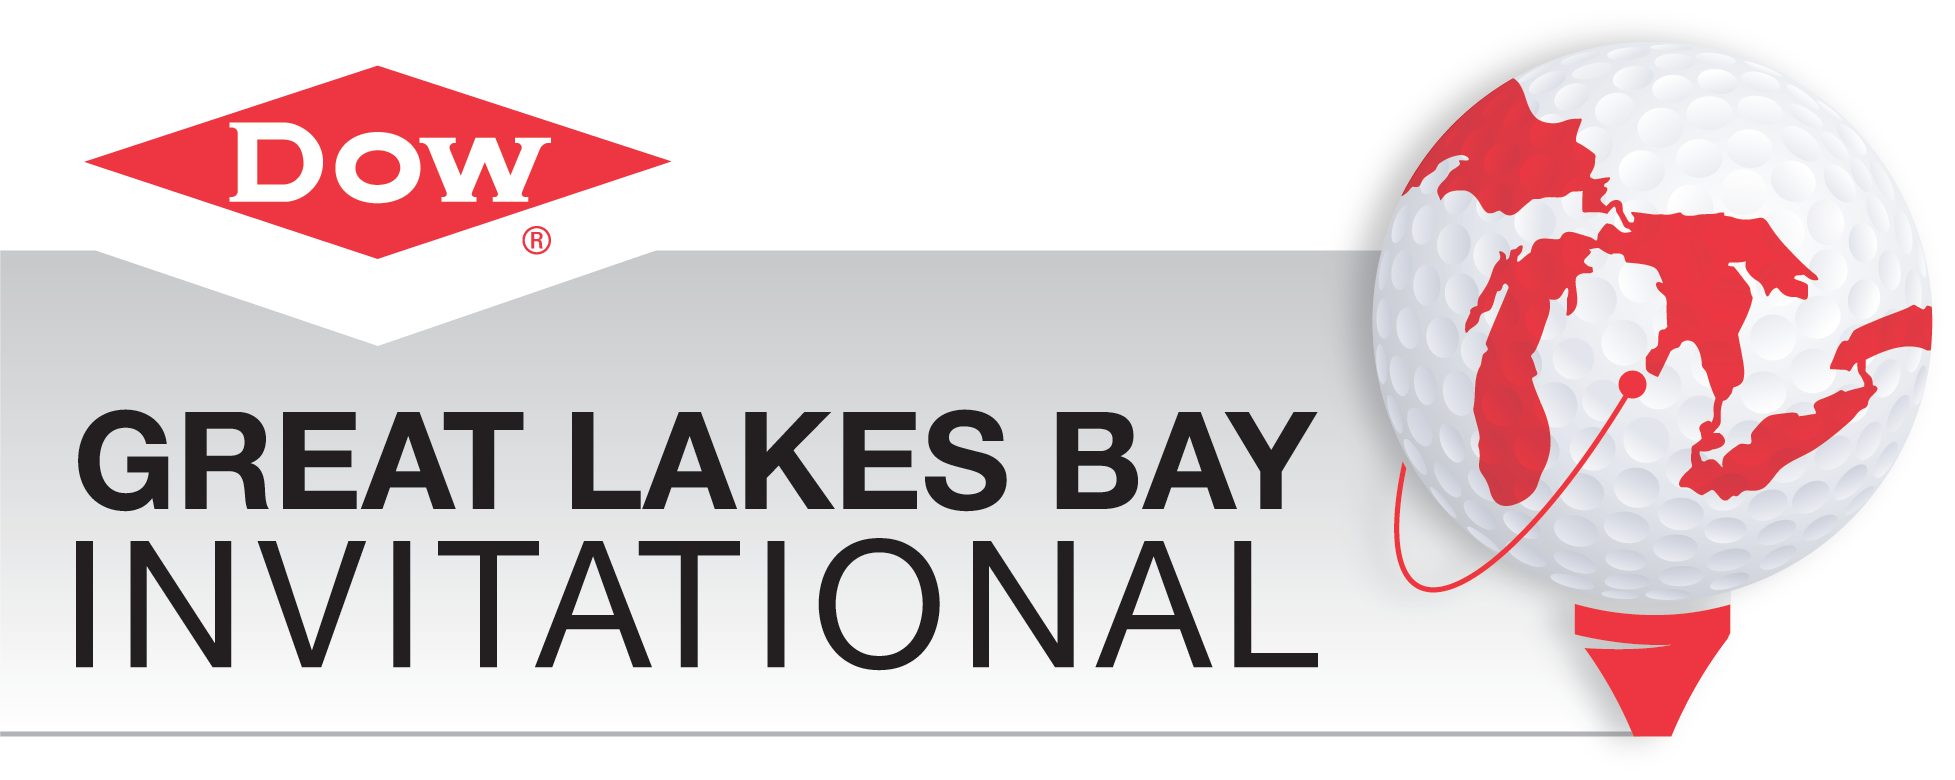 Dow Great Lakes Bay Invitational วันที่ 4